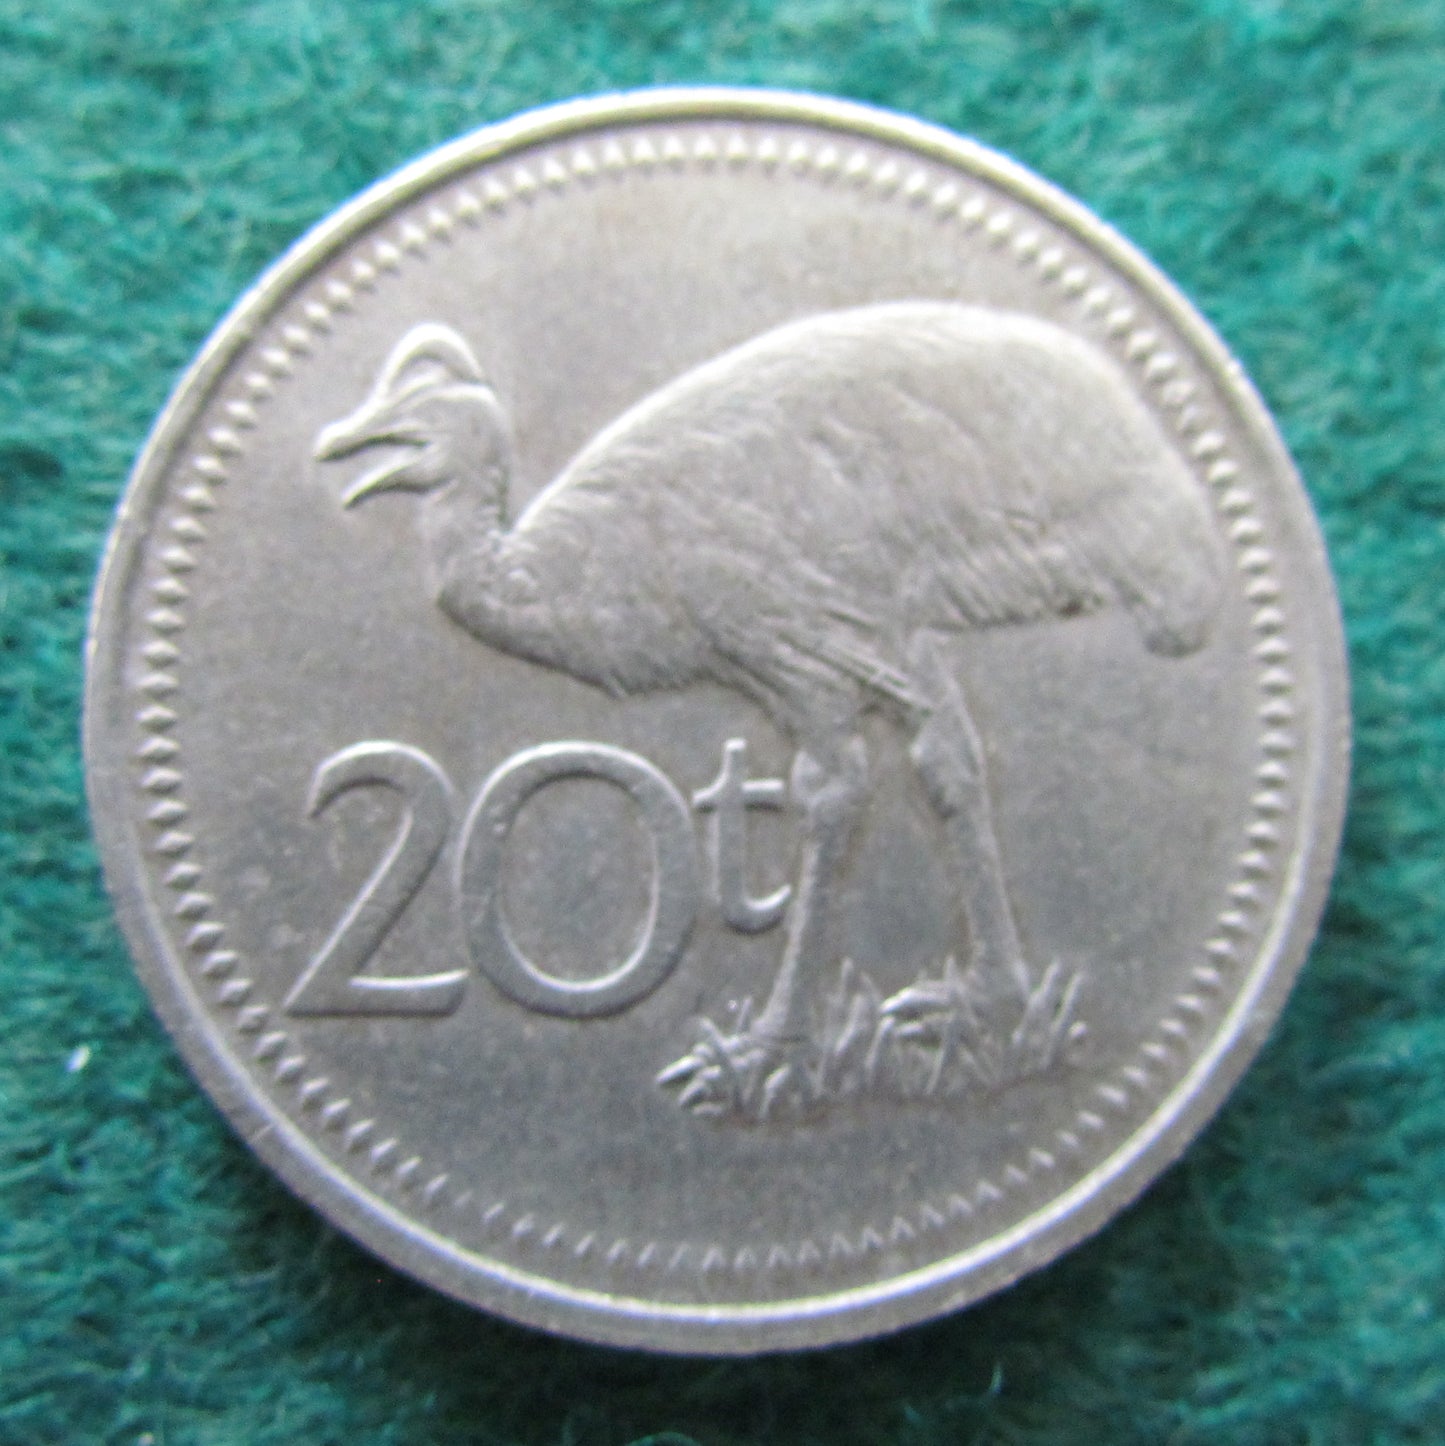 New Guinea 1981 20 Toea Coin